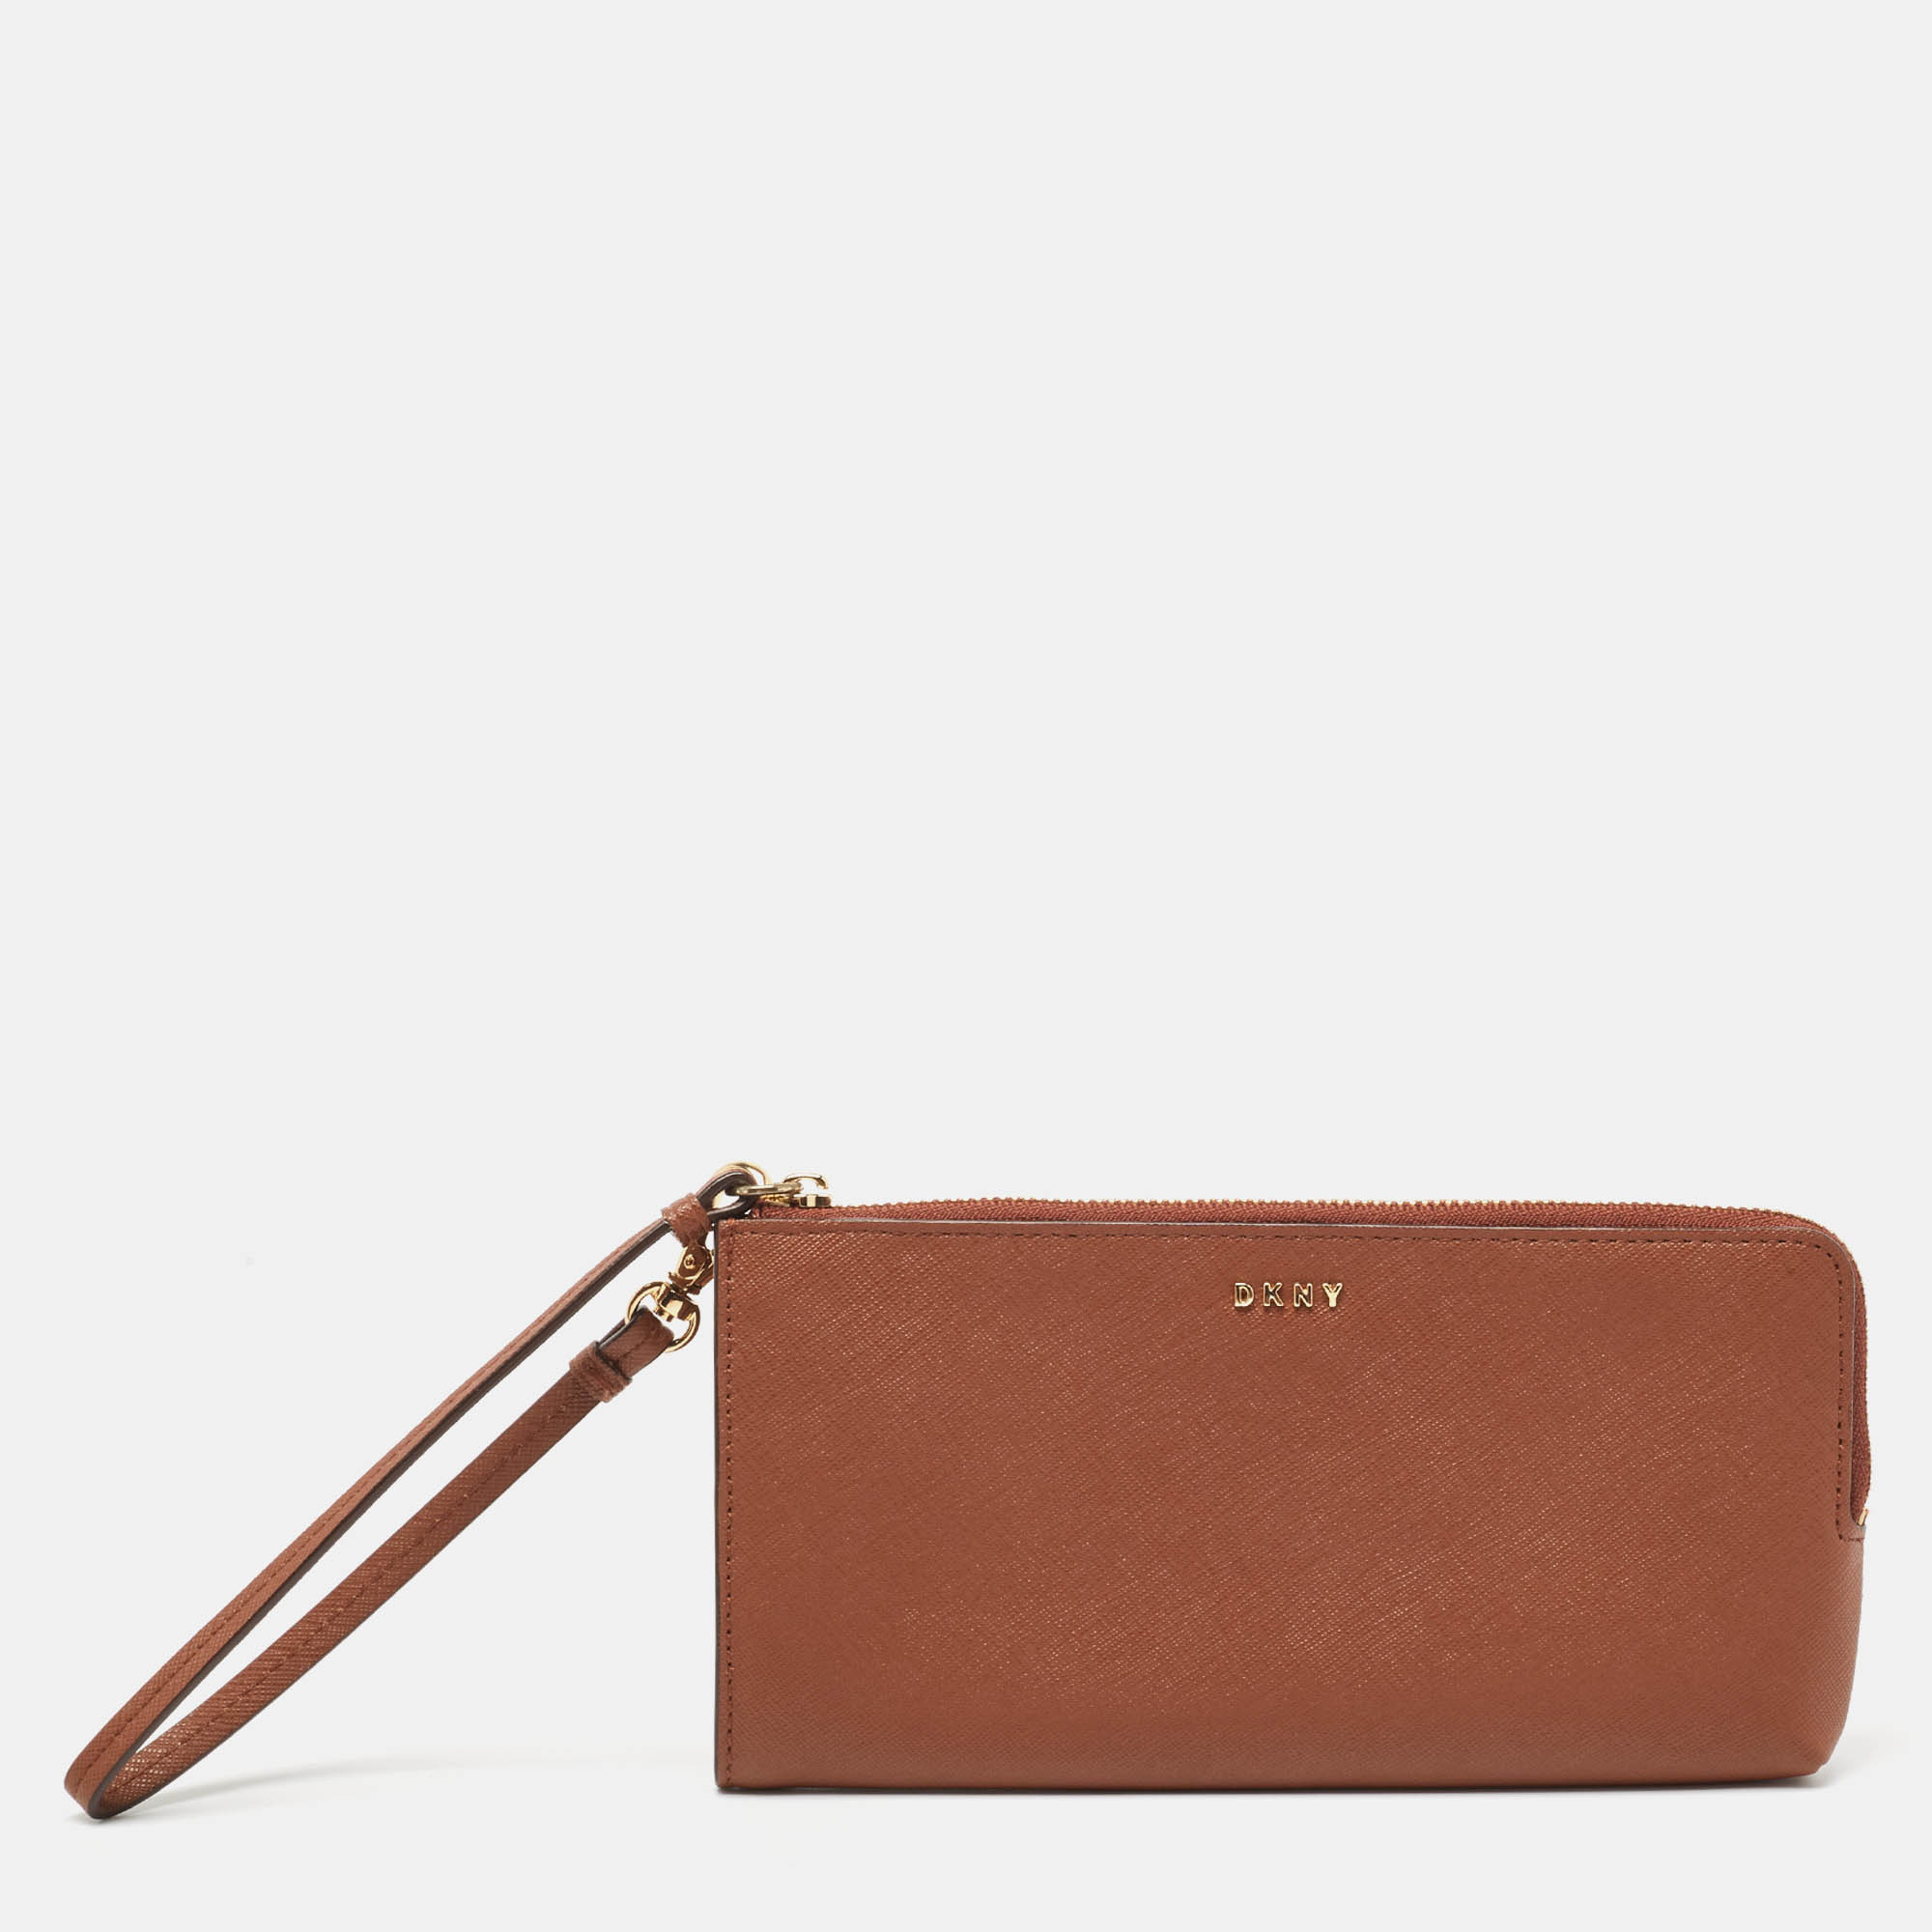 

DKNY Brown Leather Wristlet Wallet